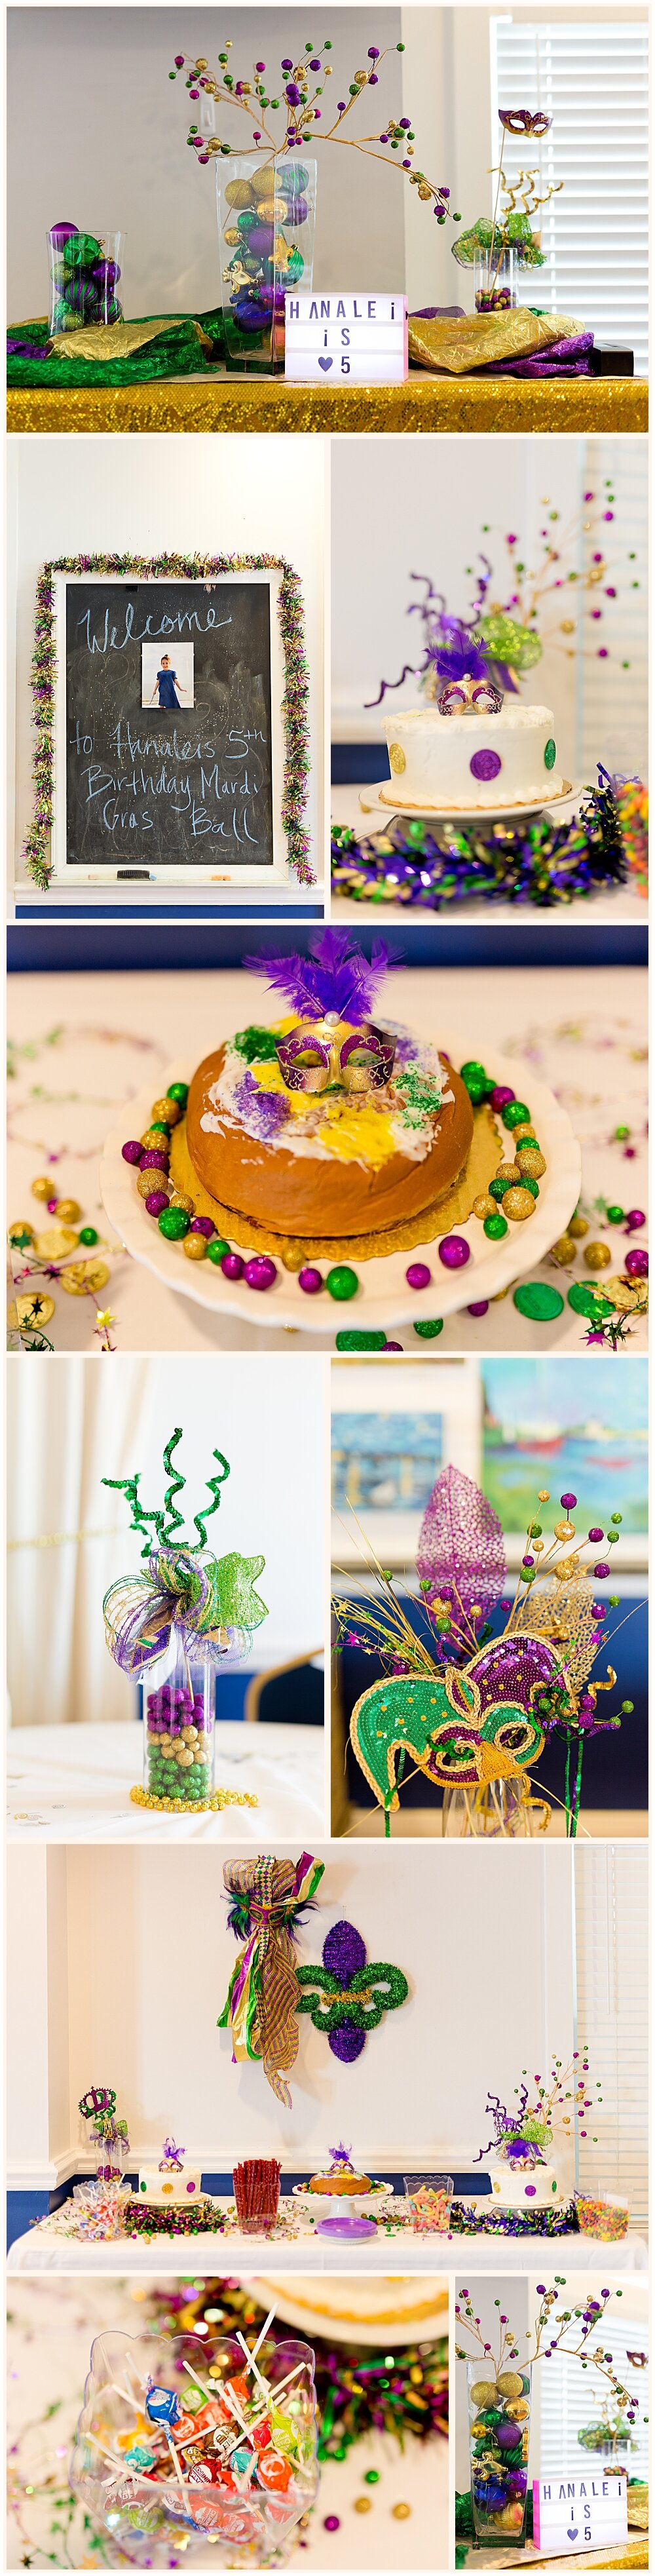 Party Ideas  Mardi gras party decorations, Mardi gras party theme, Mardi  gras decorations